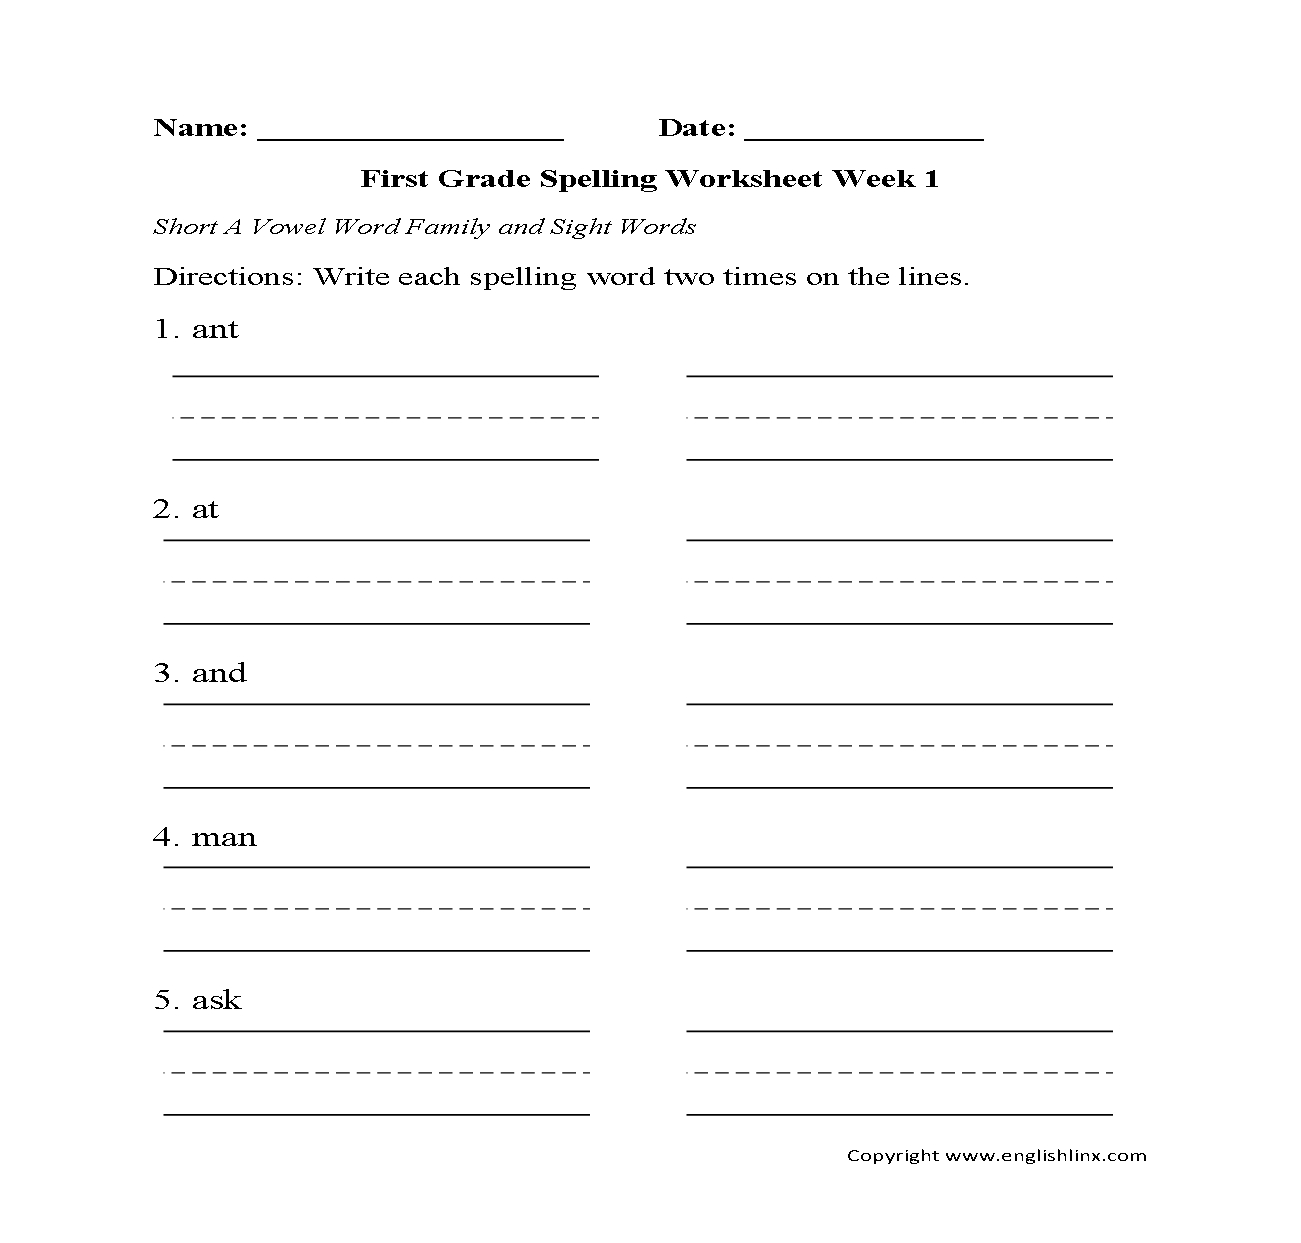 Spelling Worksheets  First Grade Spelling Worksheets Along With Spelling Worksheets Grade 1